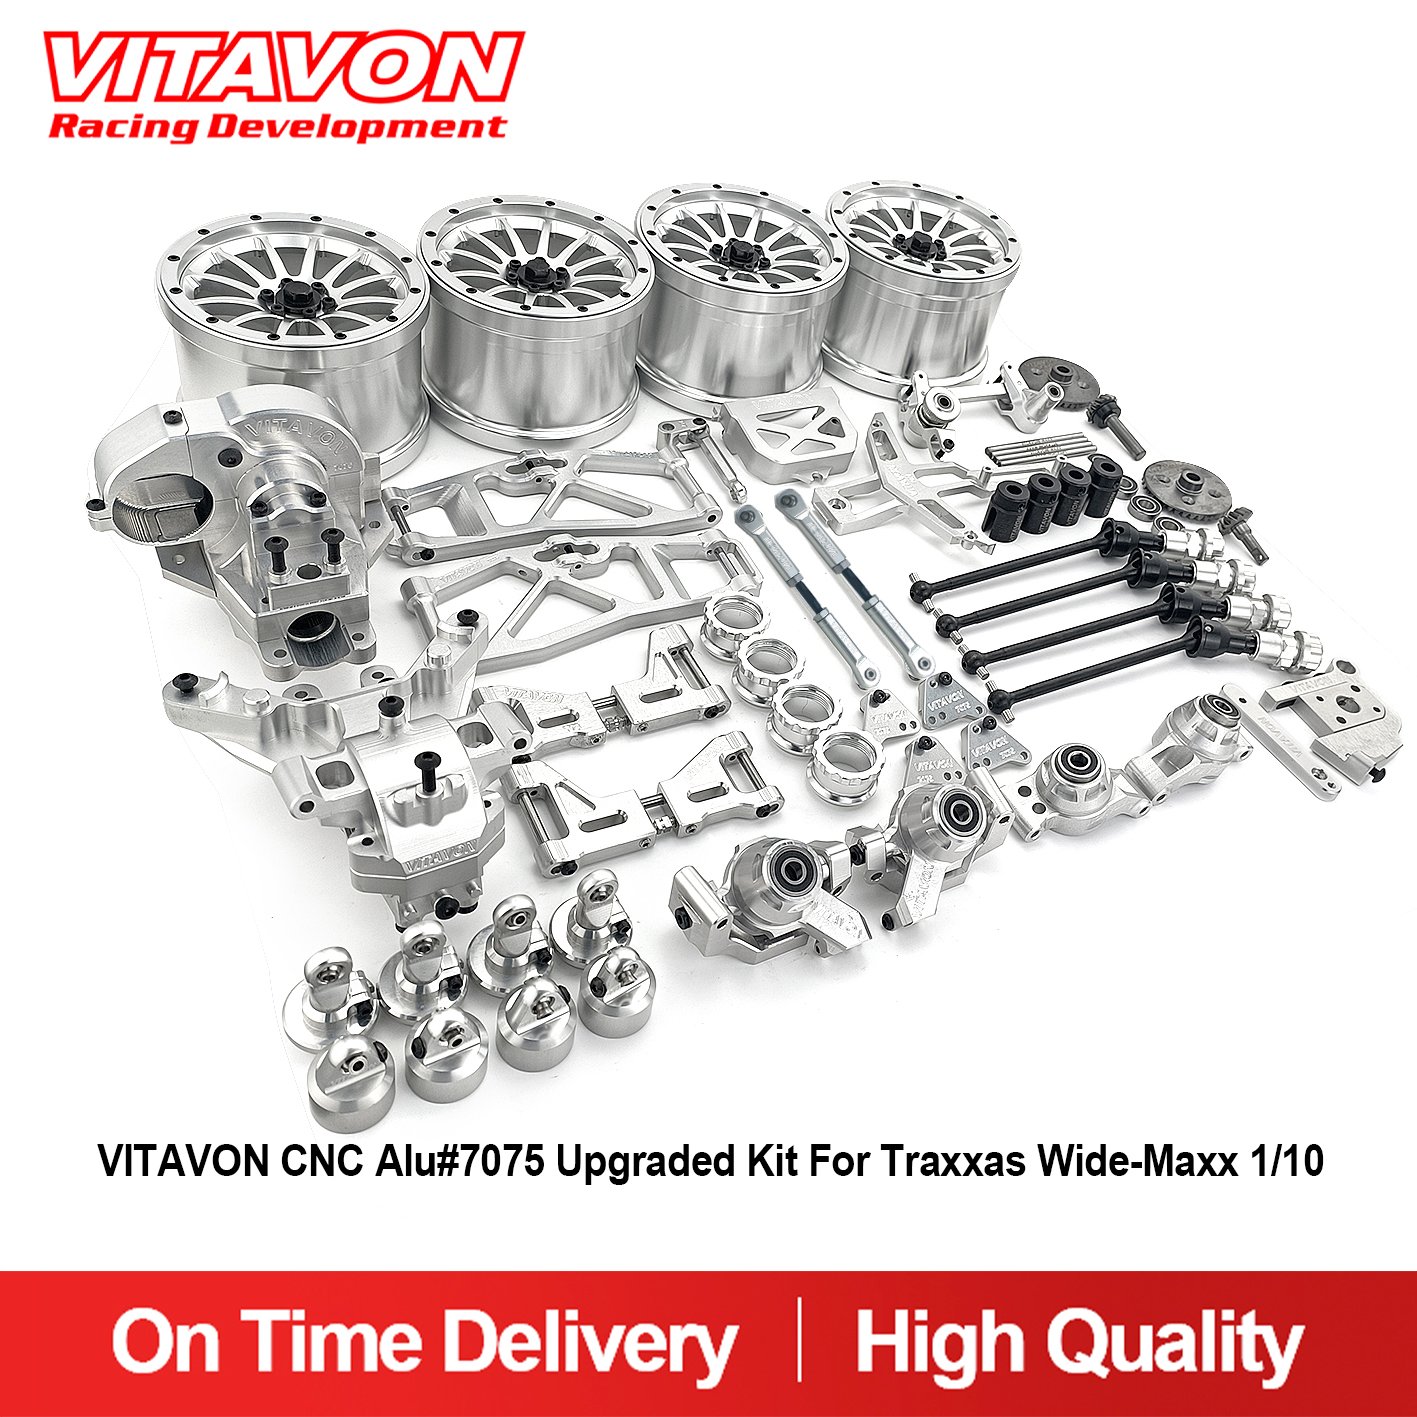 VITAVON CNC Alu#7075 Upgraded Kit For Traxxas Wide-Maxx 1/10